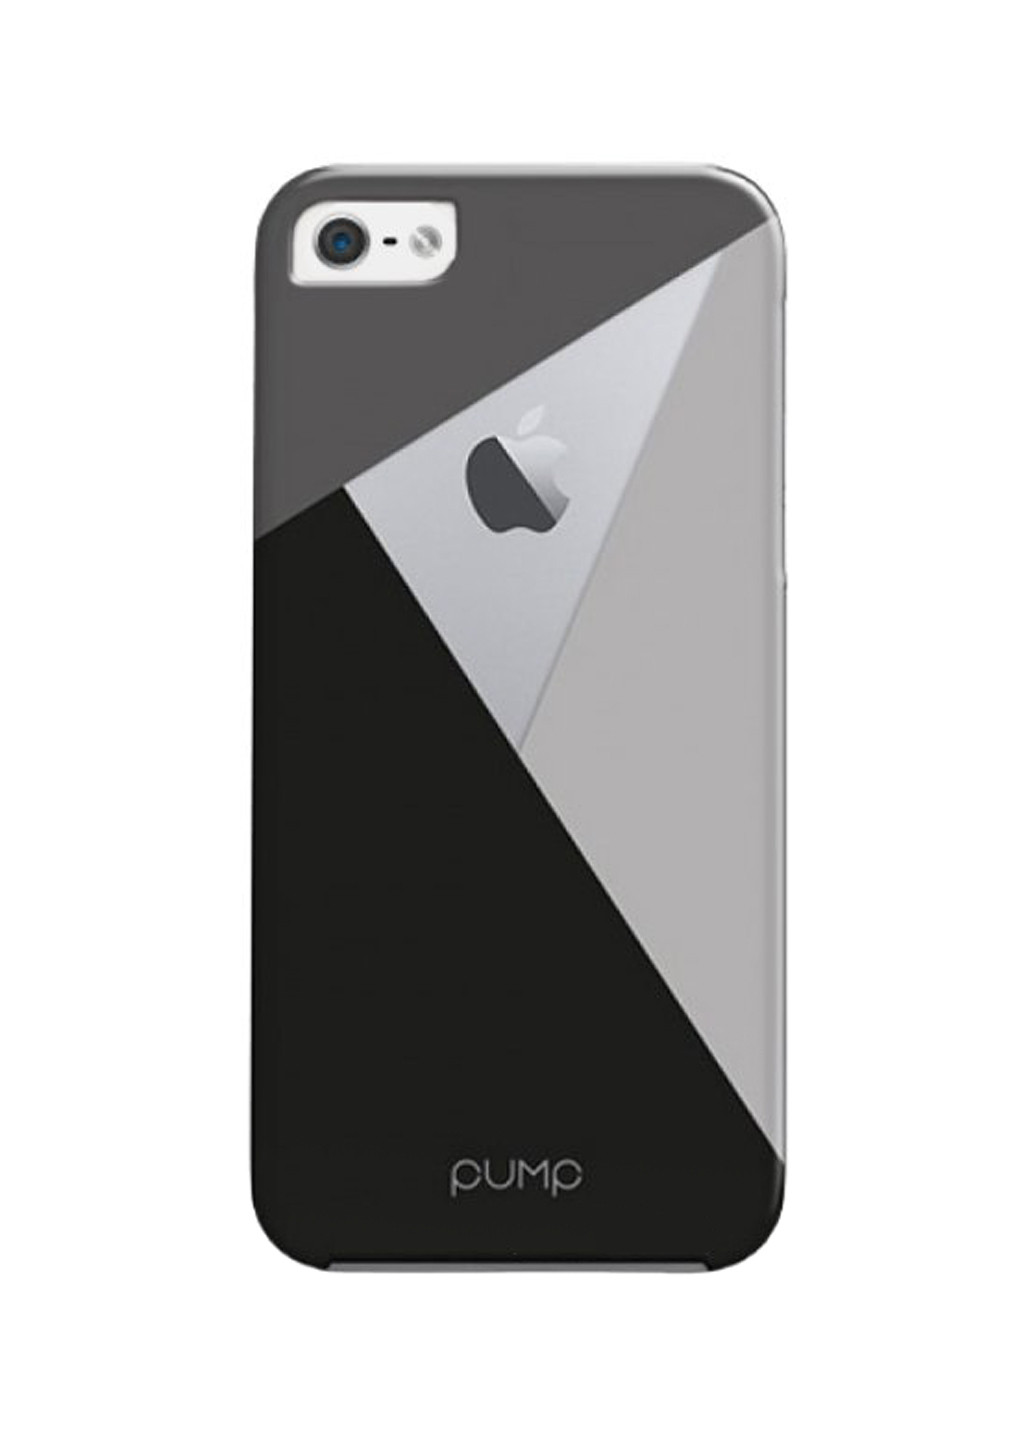 Чохол Transperency Case for iPhone 5 / 5S / SE Black / Gray Pump transperency case для iphone 5/5s/se black/gray (136993836)